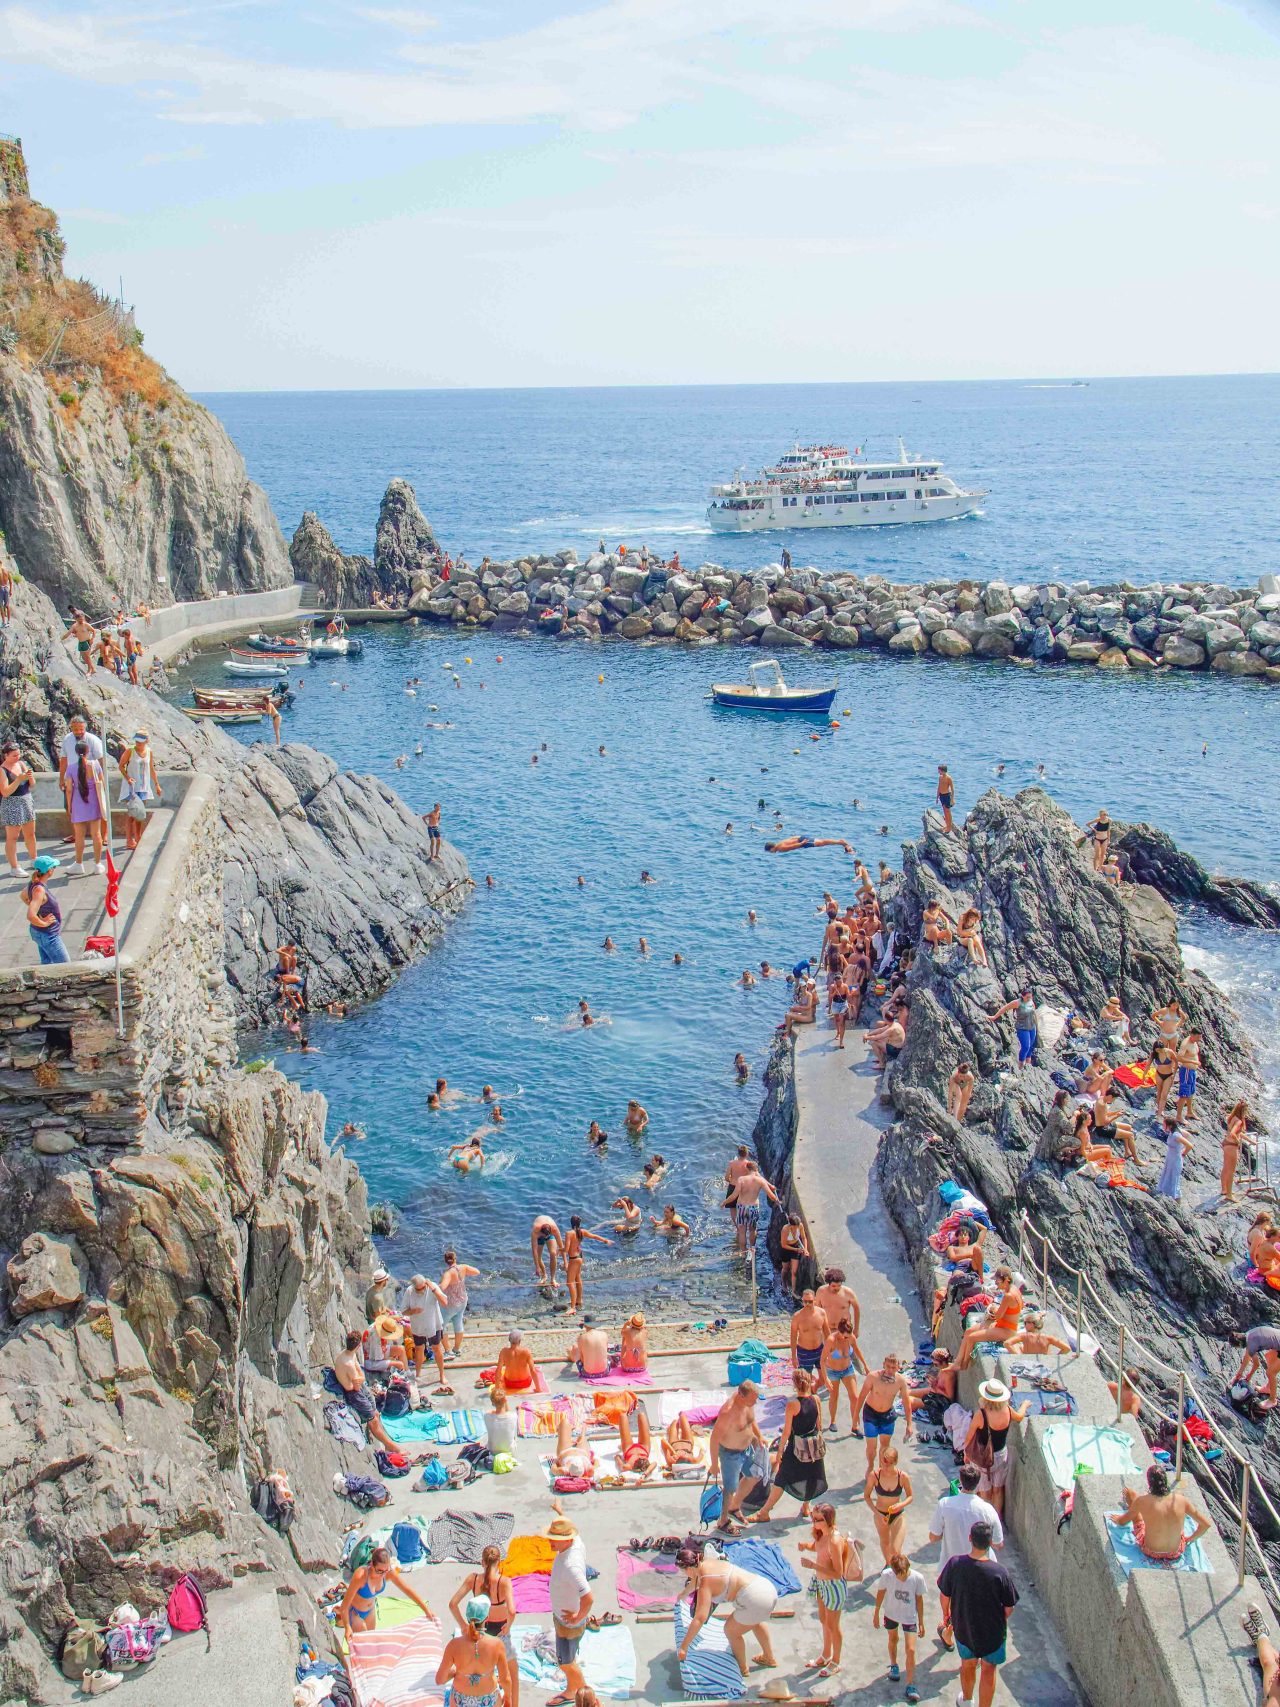 Photograph Cinque Terre